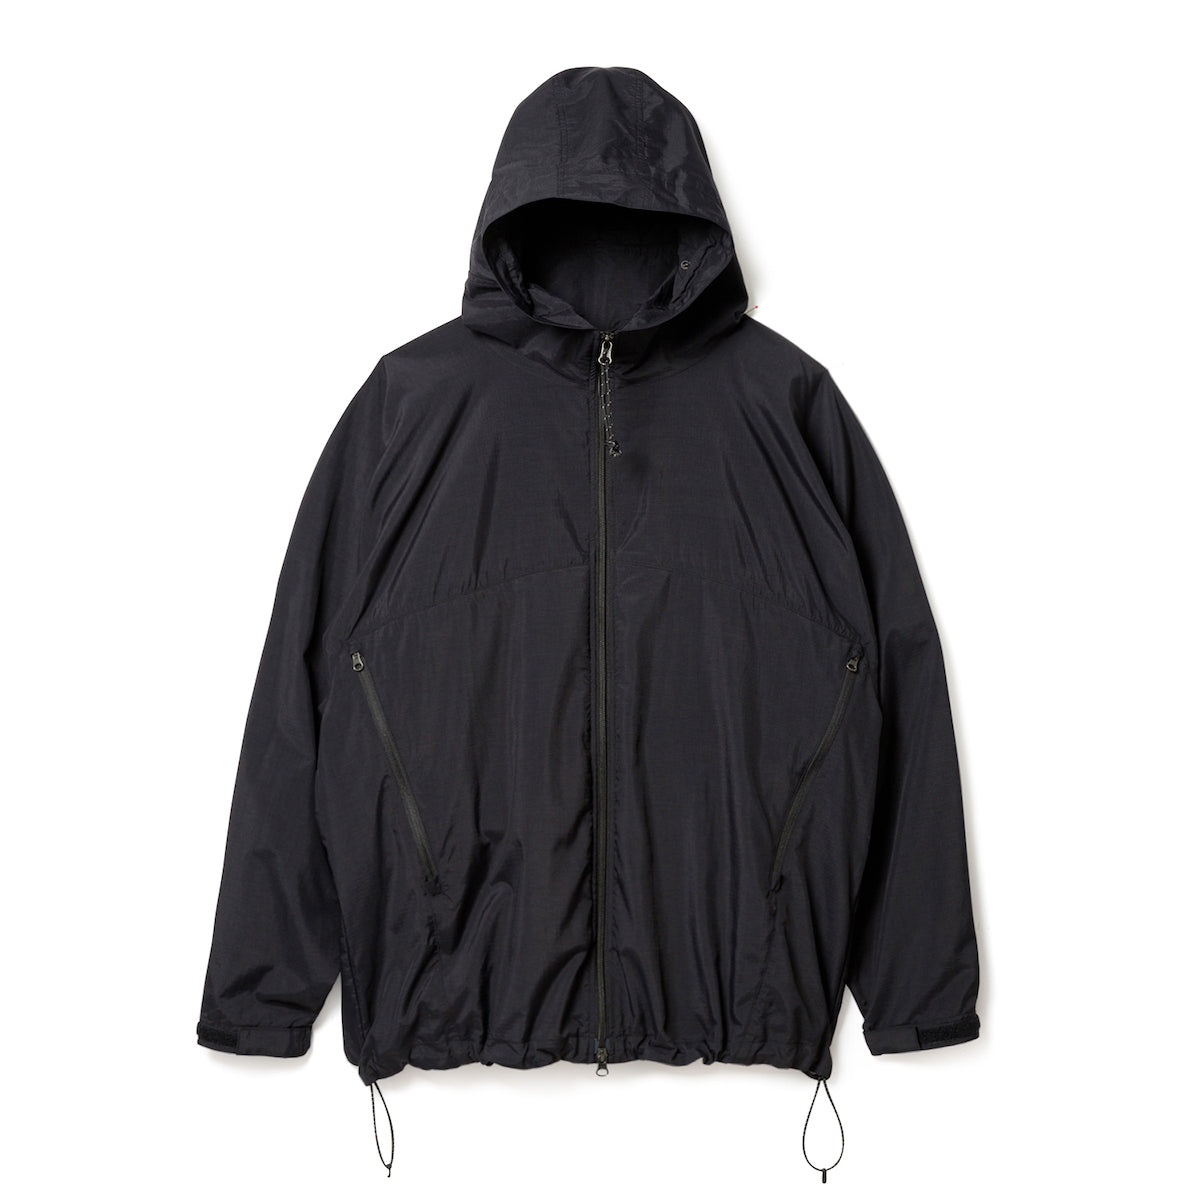 Supplex(R) Nylon Hooded Track Jacket